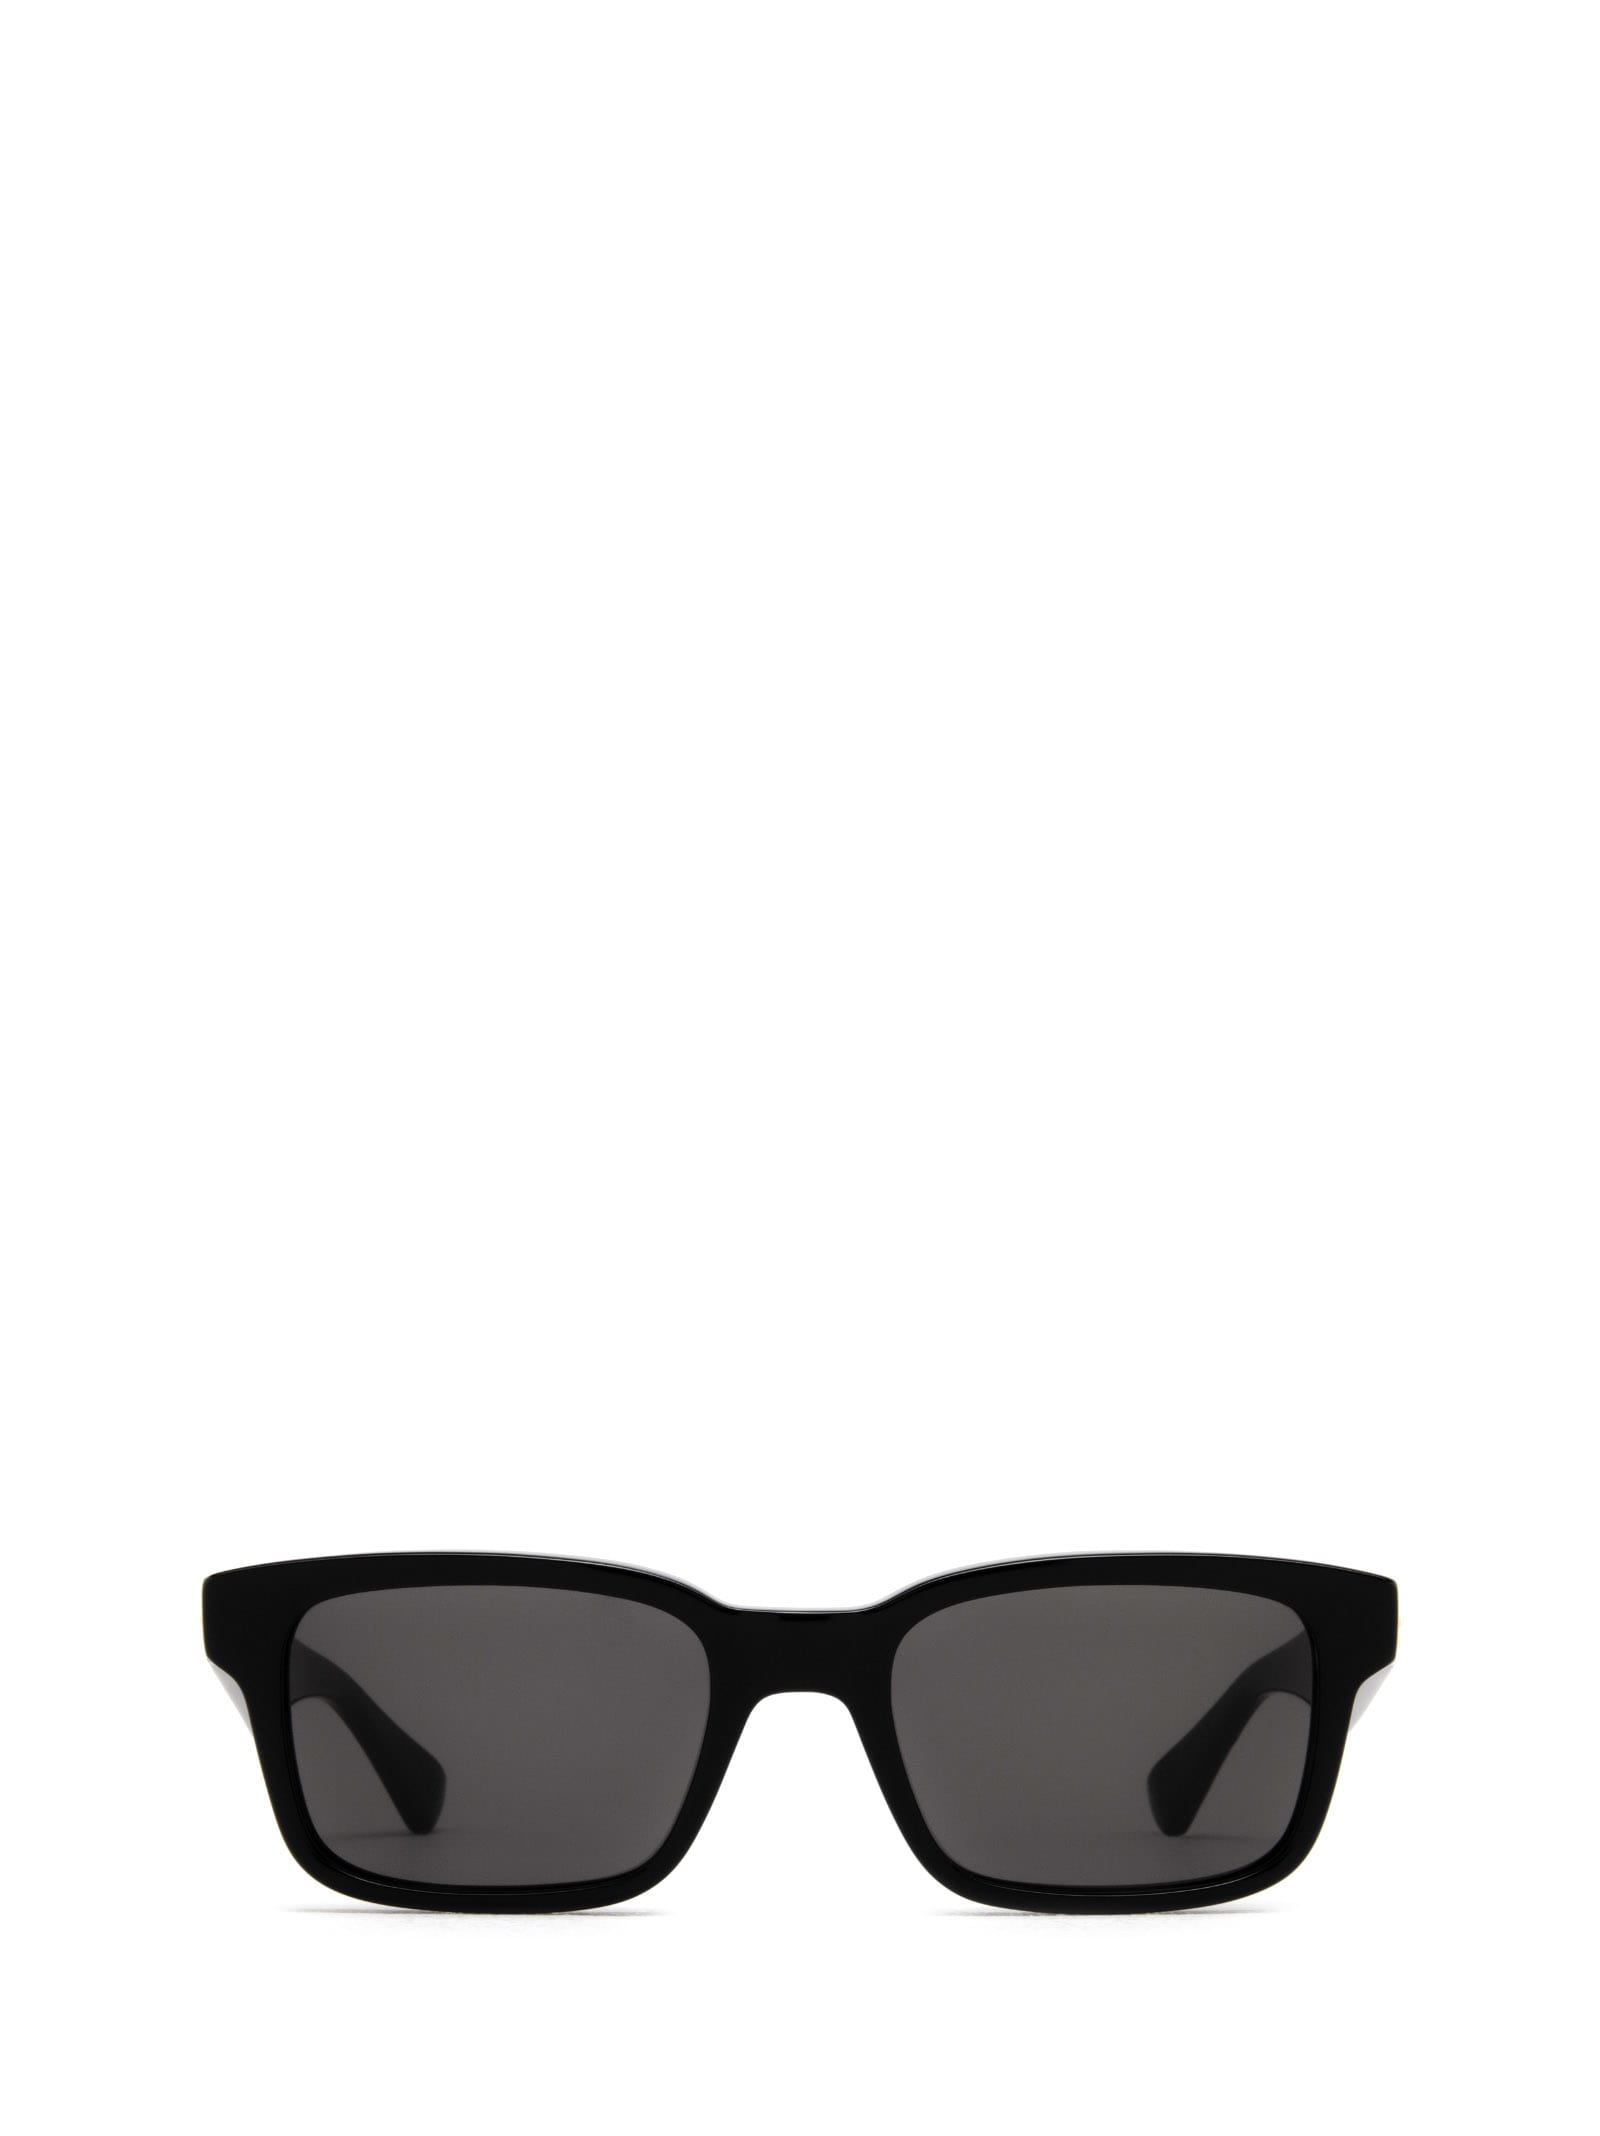 Bv1146s Black Sunglasses